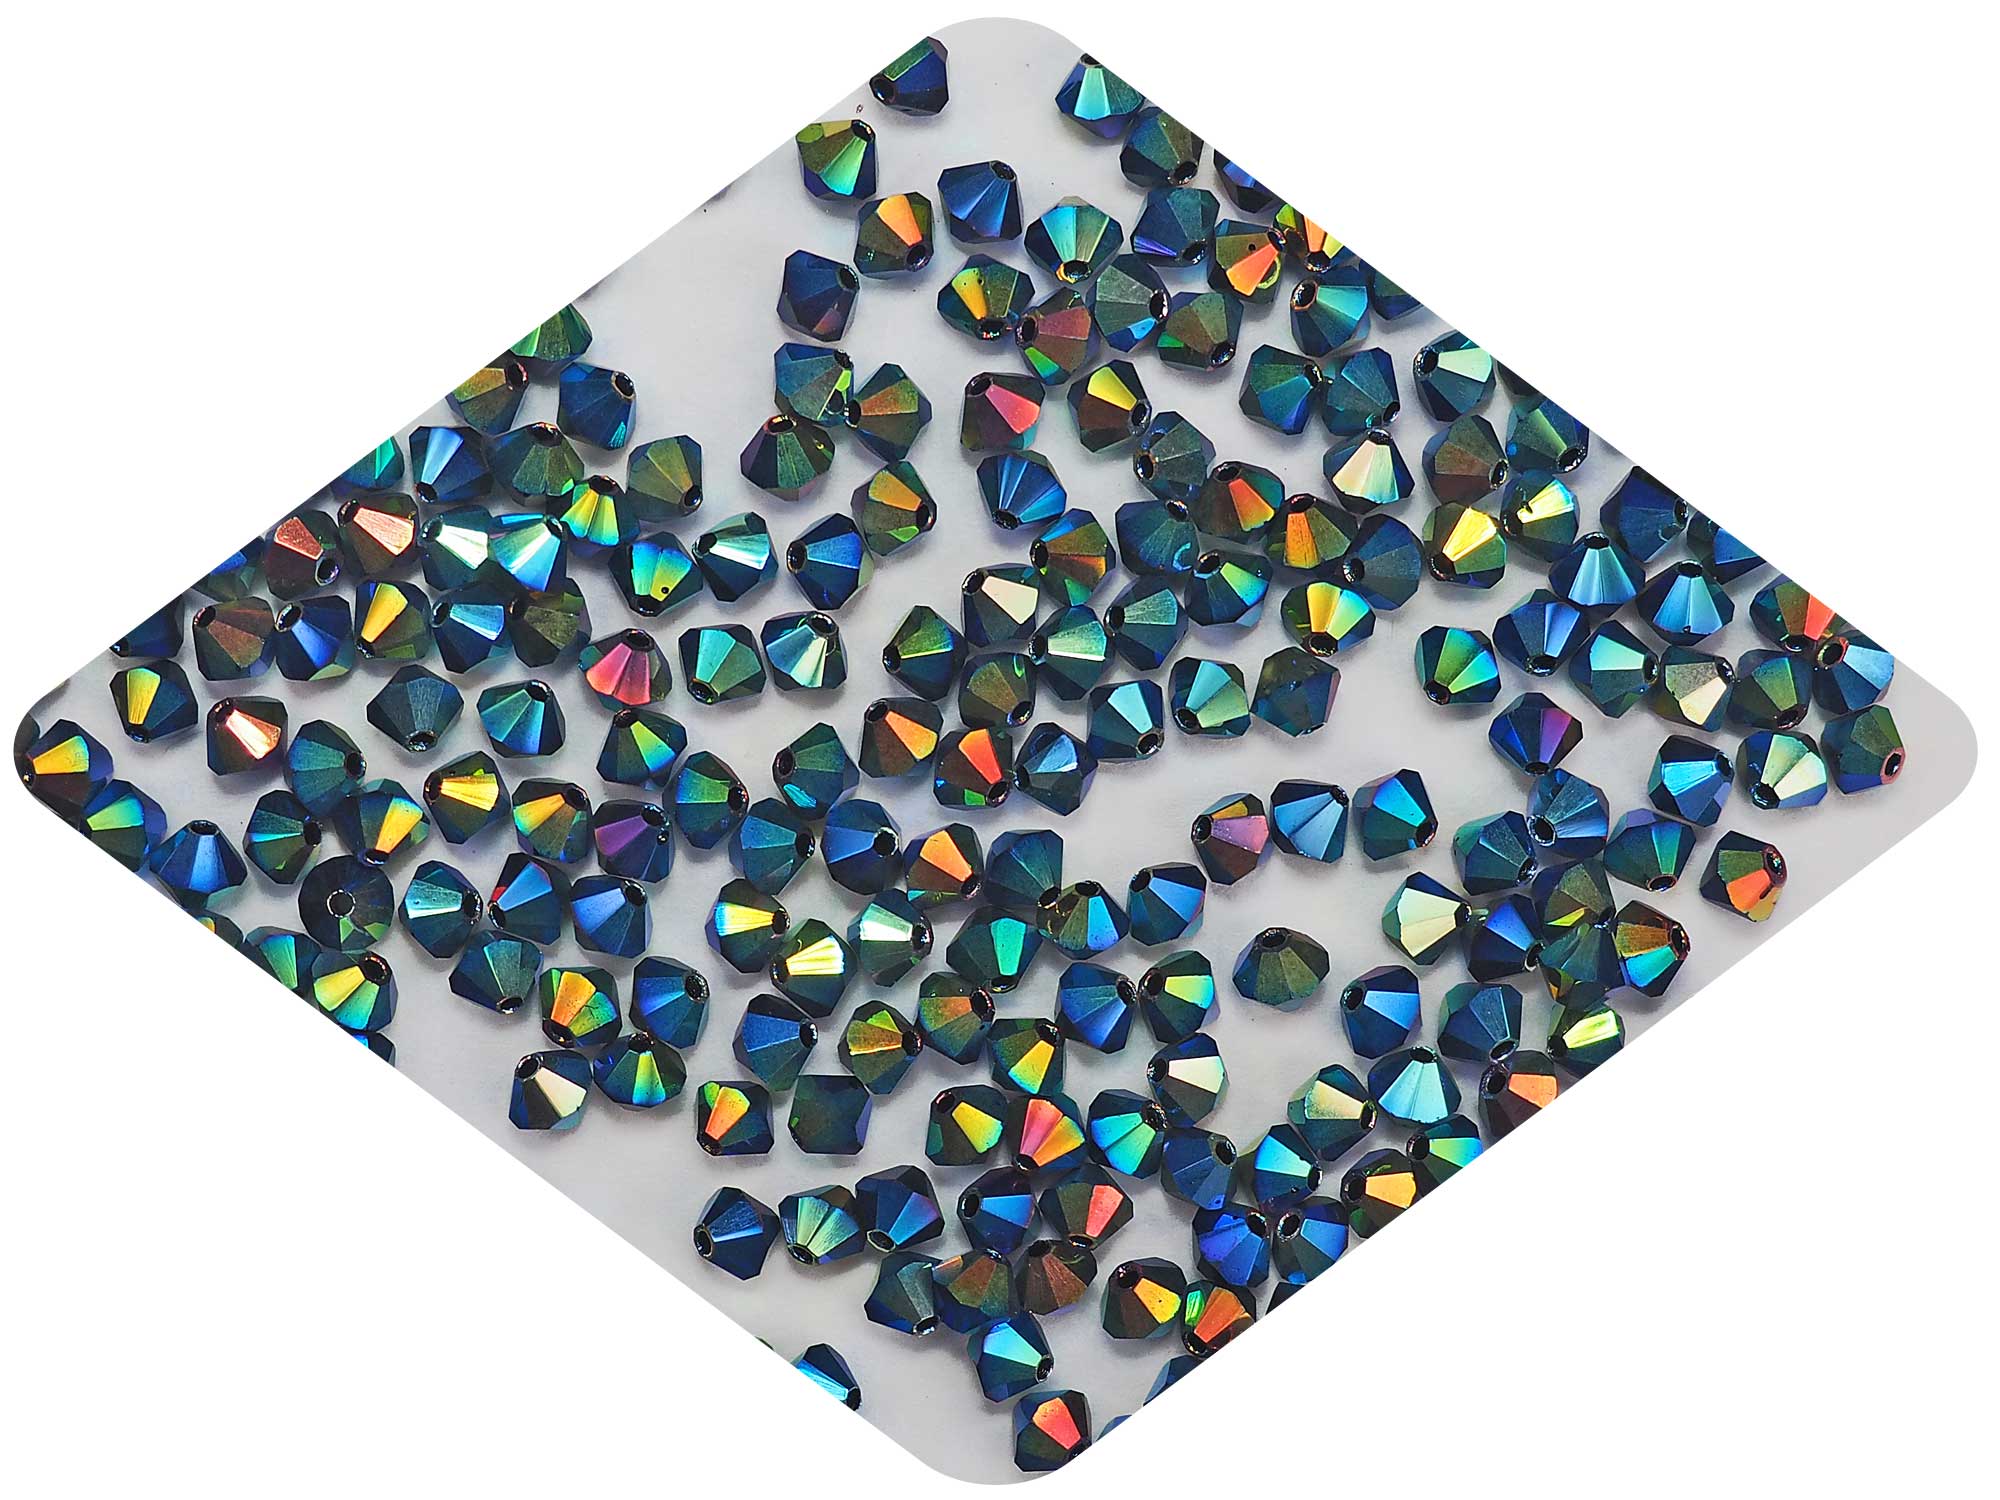 Jet Marvel-AB, Czech Glass Beads, Machine Cut Bicones (MC Rondell, Diamond Shape), black crystals coated with RICH Aurora Borealis